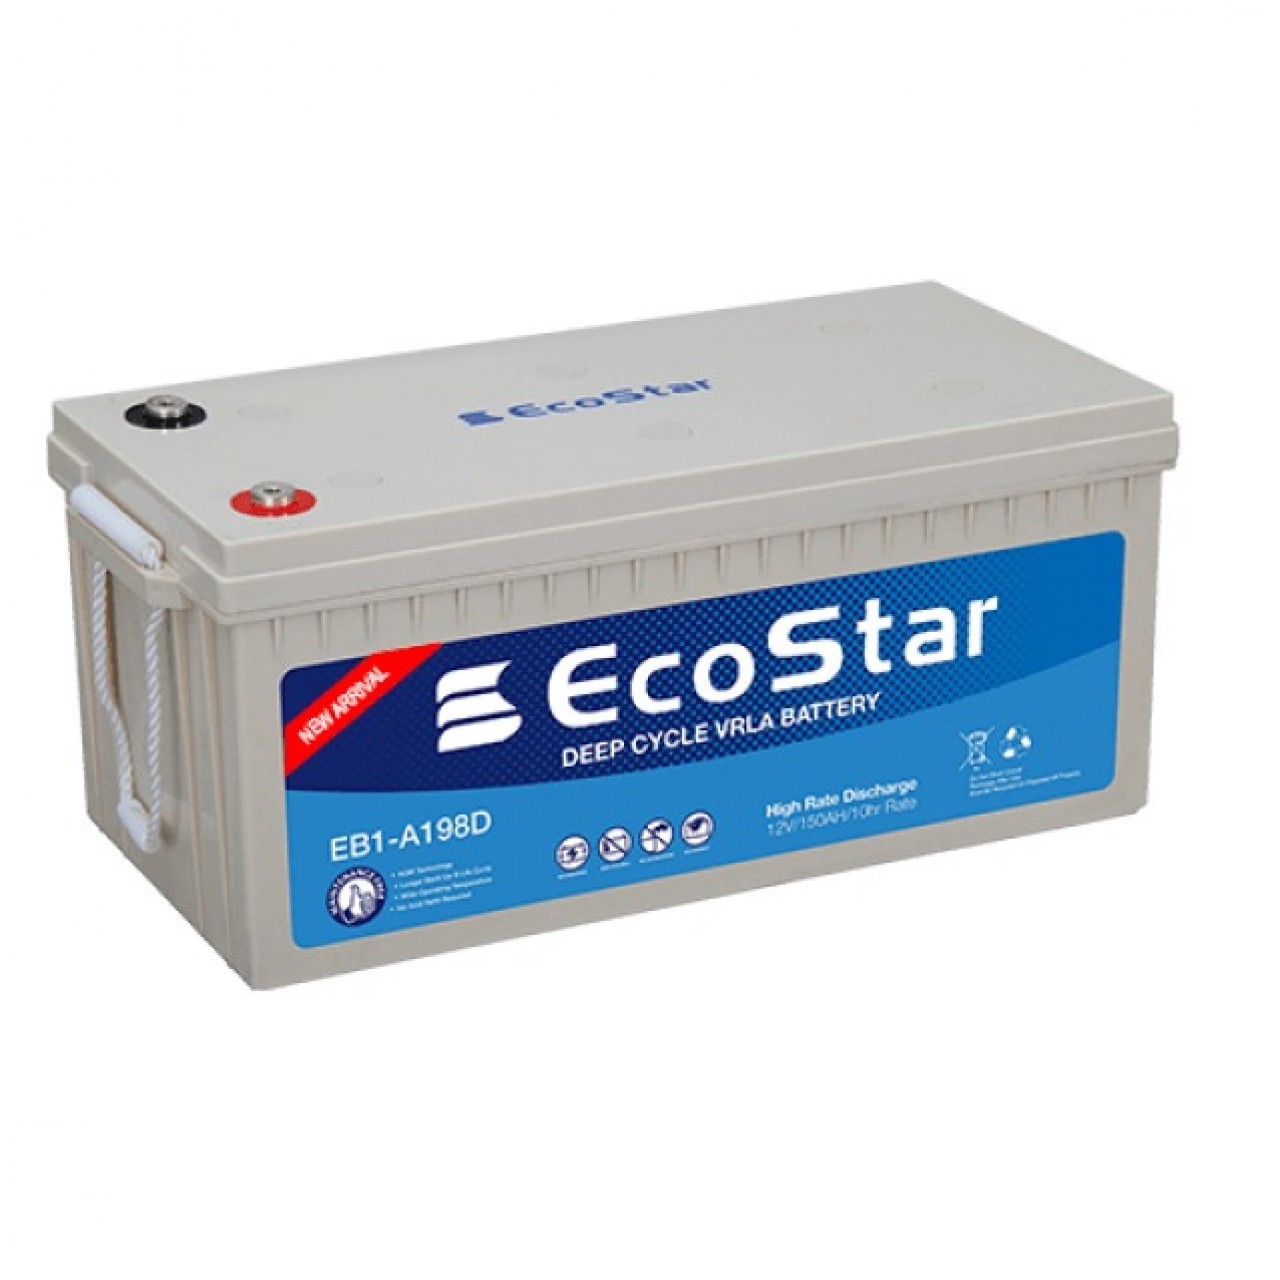 EcoStar Battery EB1-A198D battery – Leak Proof